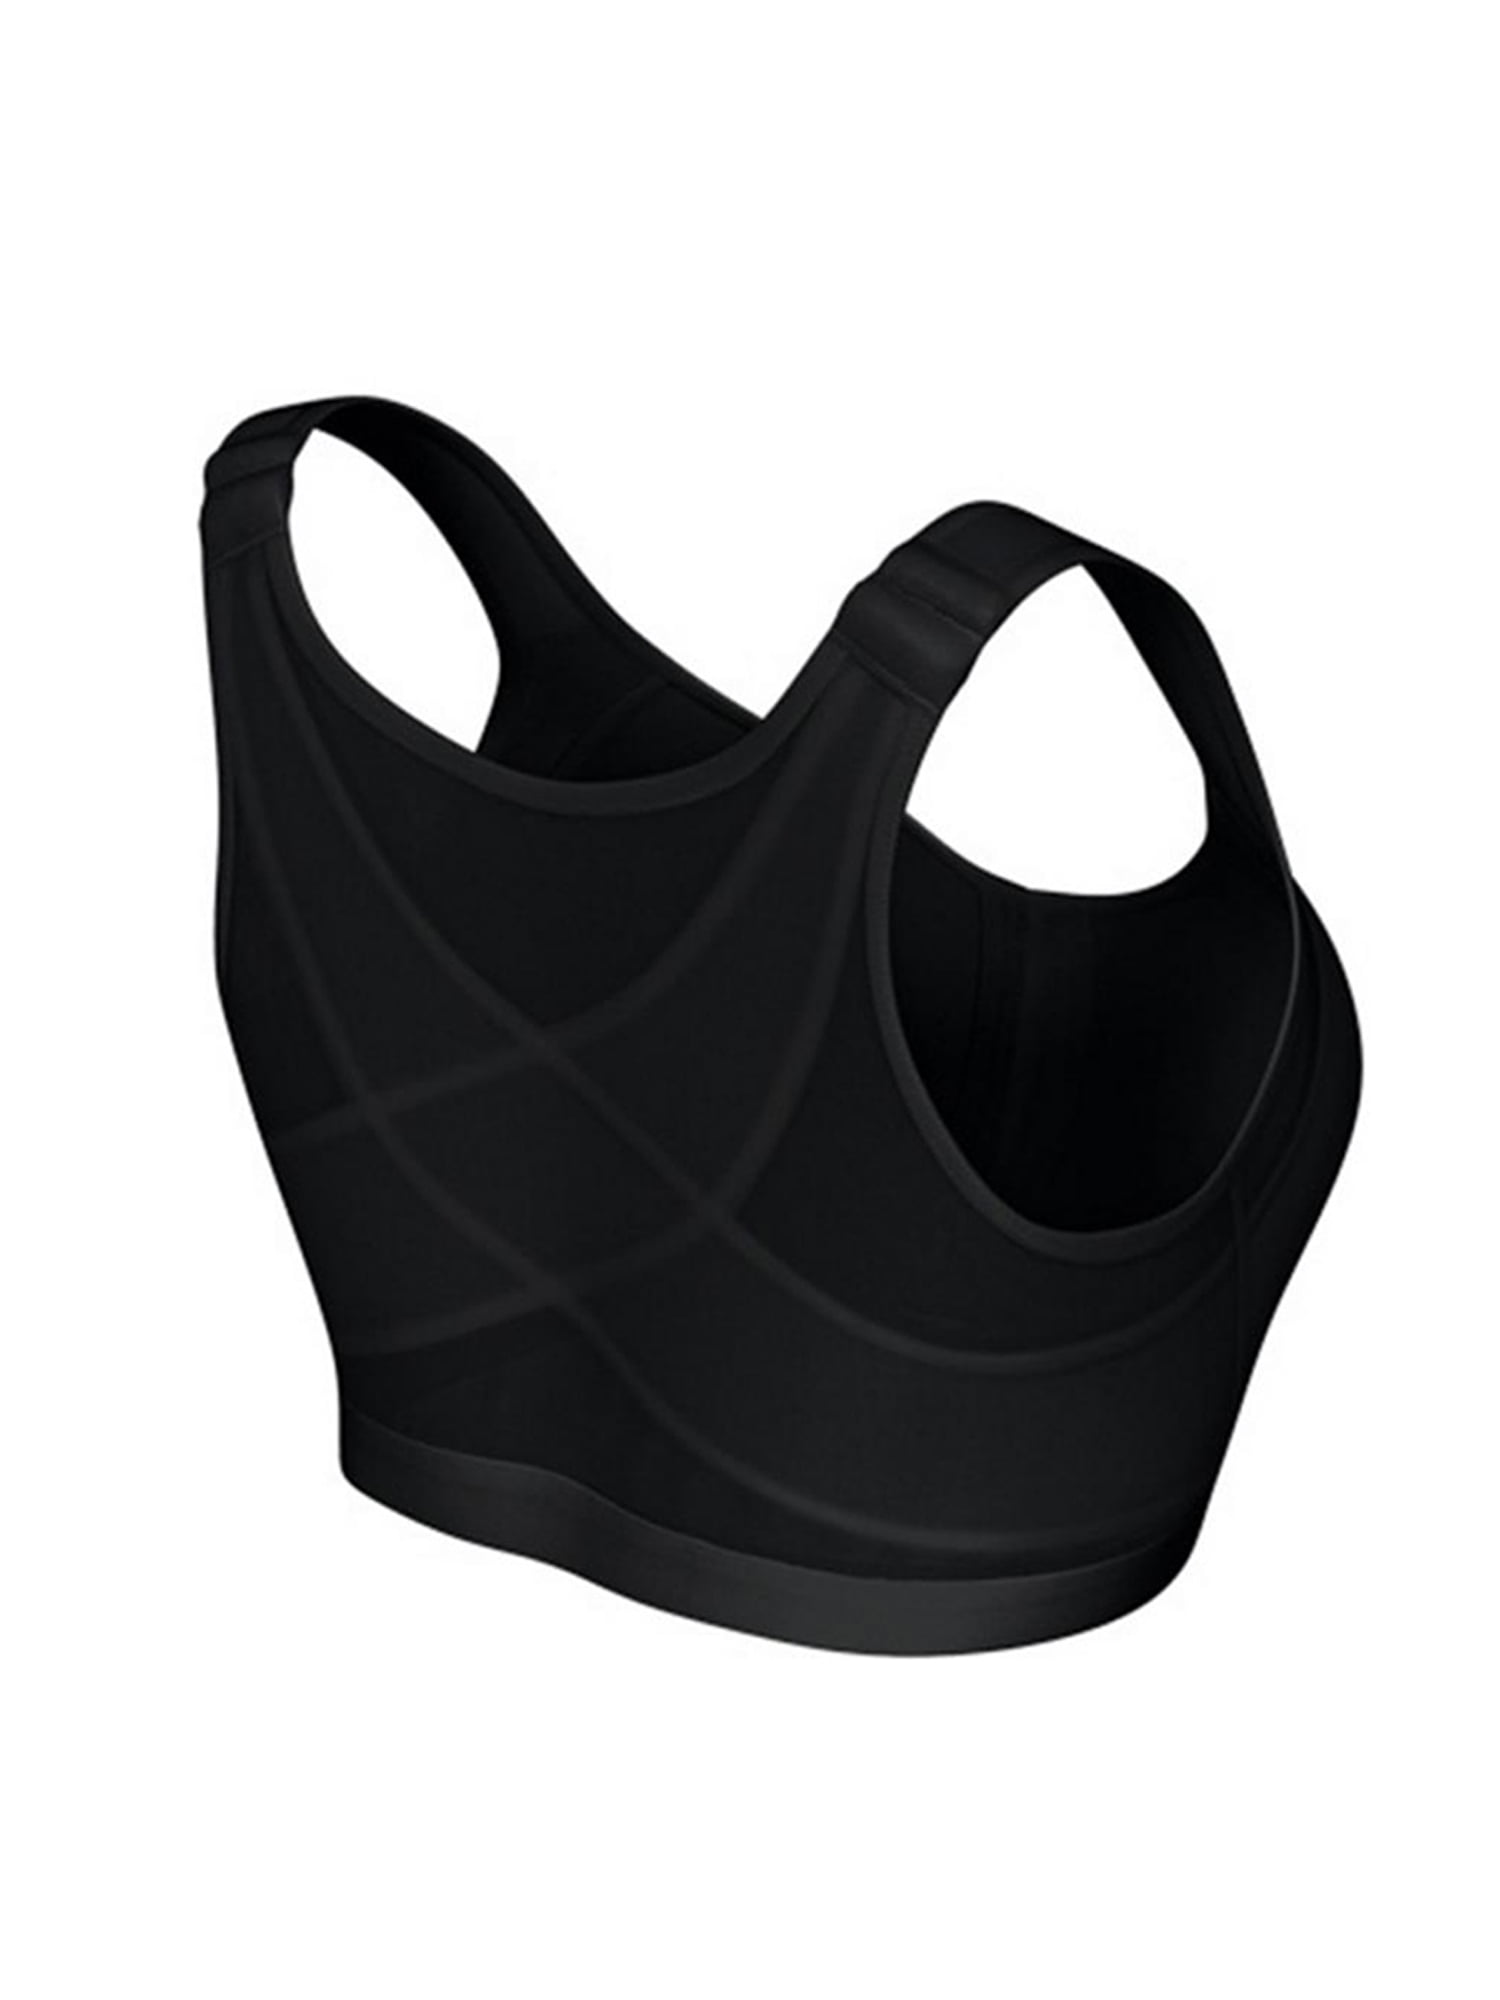 CAROOTU Women Posture Corrector Bra Wireless Back Support Lift Up Yoga Bra  Underwear 